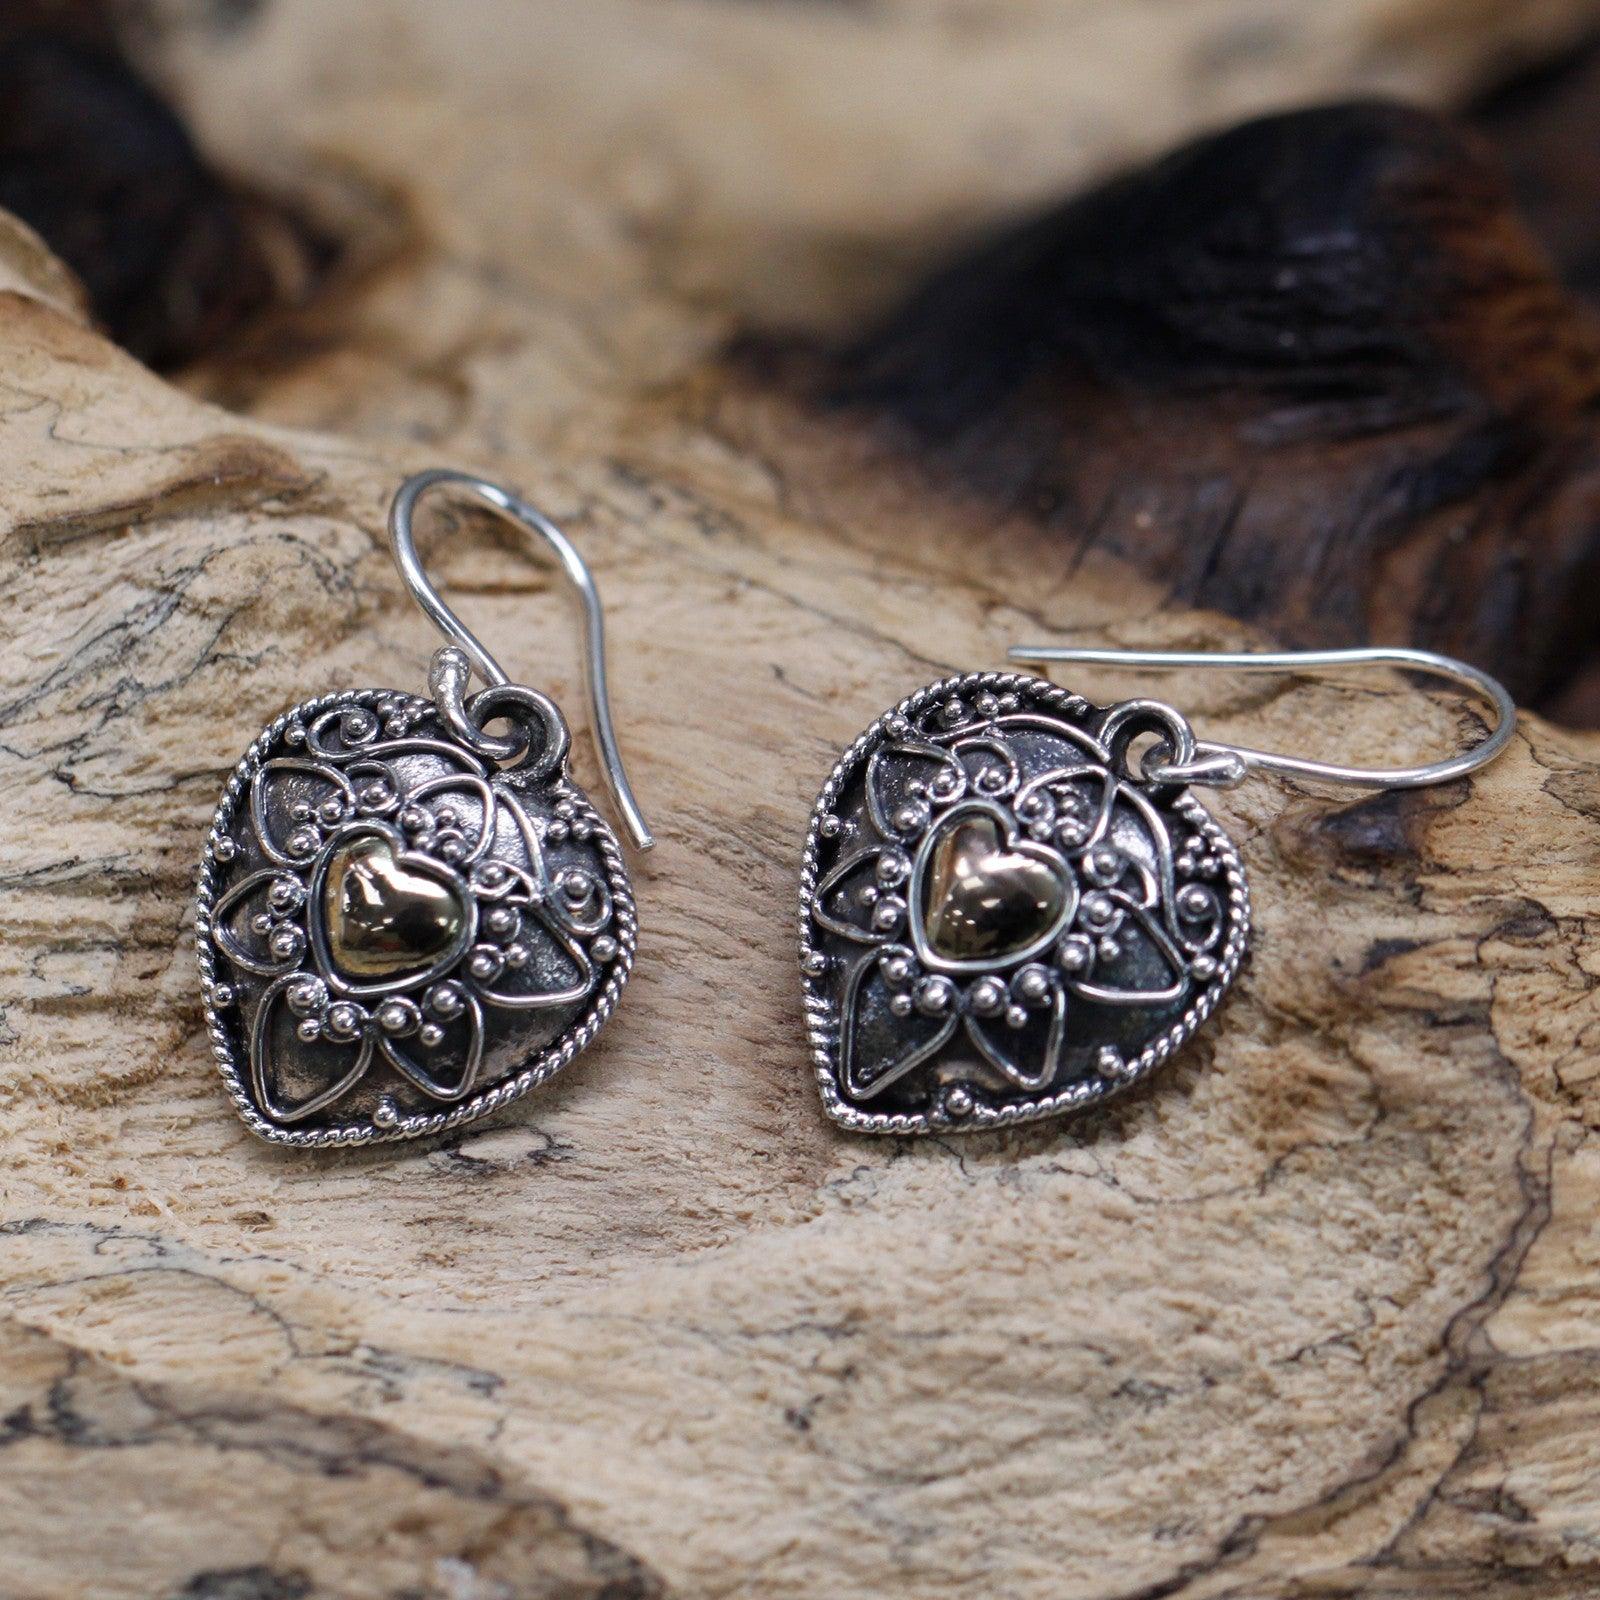 Handmade Bali Jewellery Silver & Gold Earring - Mandala Hearts - DuvetDay.co.uk